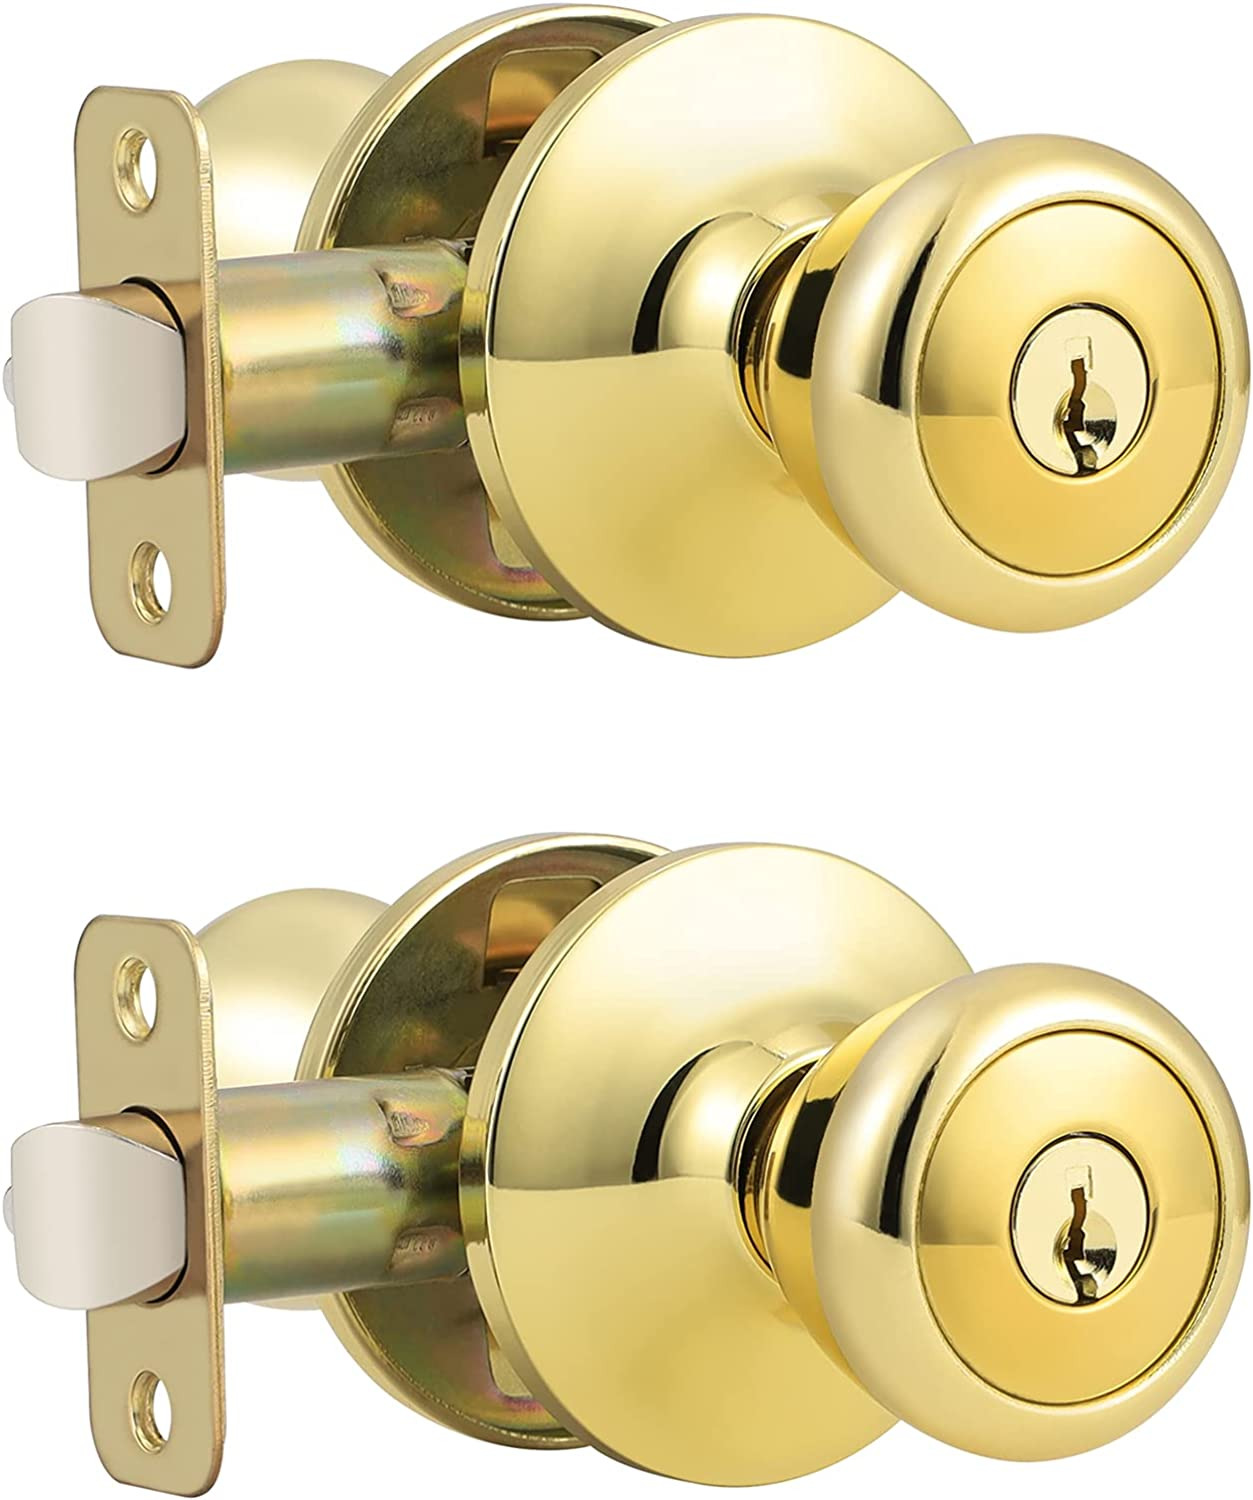 2 Pack Keyed Alike Door Knobs Polished Brass Exterior Door Knob with Same Keys T